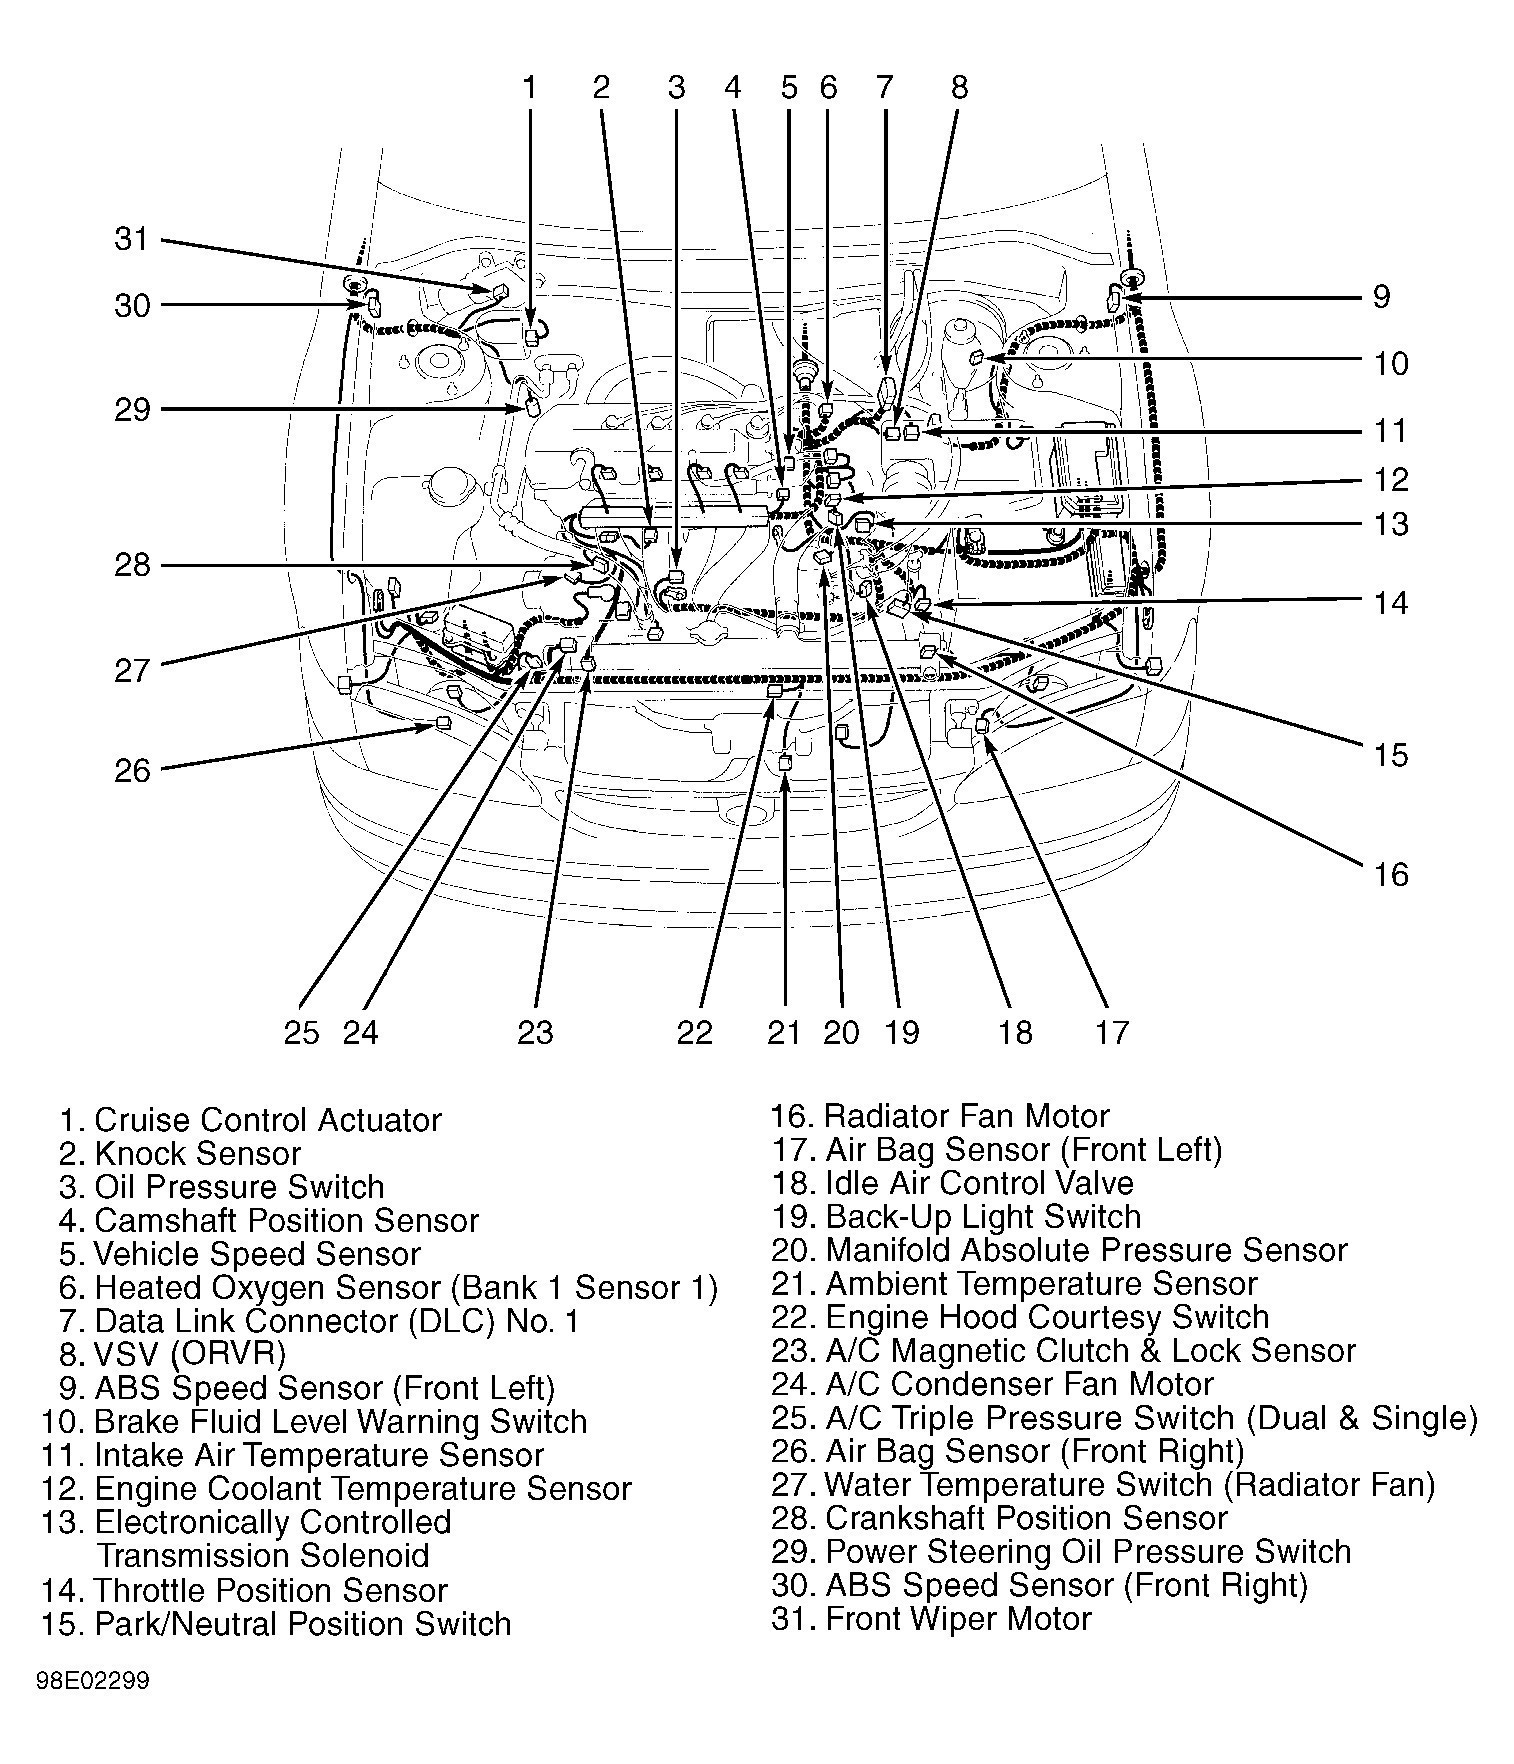 Mazda 5 Engine Diagram 1999 toyota Corolla Engine Part Diagram Engine Part Diagram Car Of Mazda 5 Engine Diagram